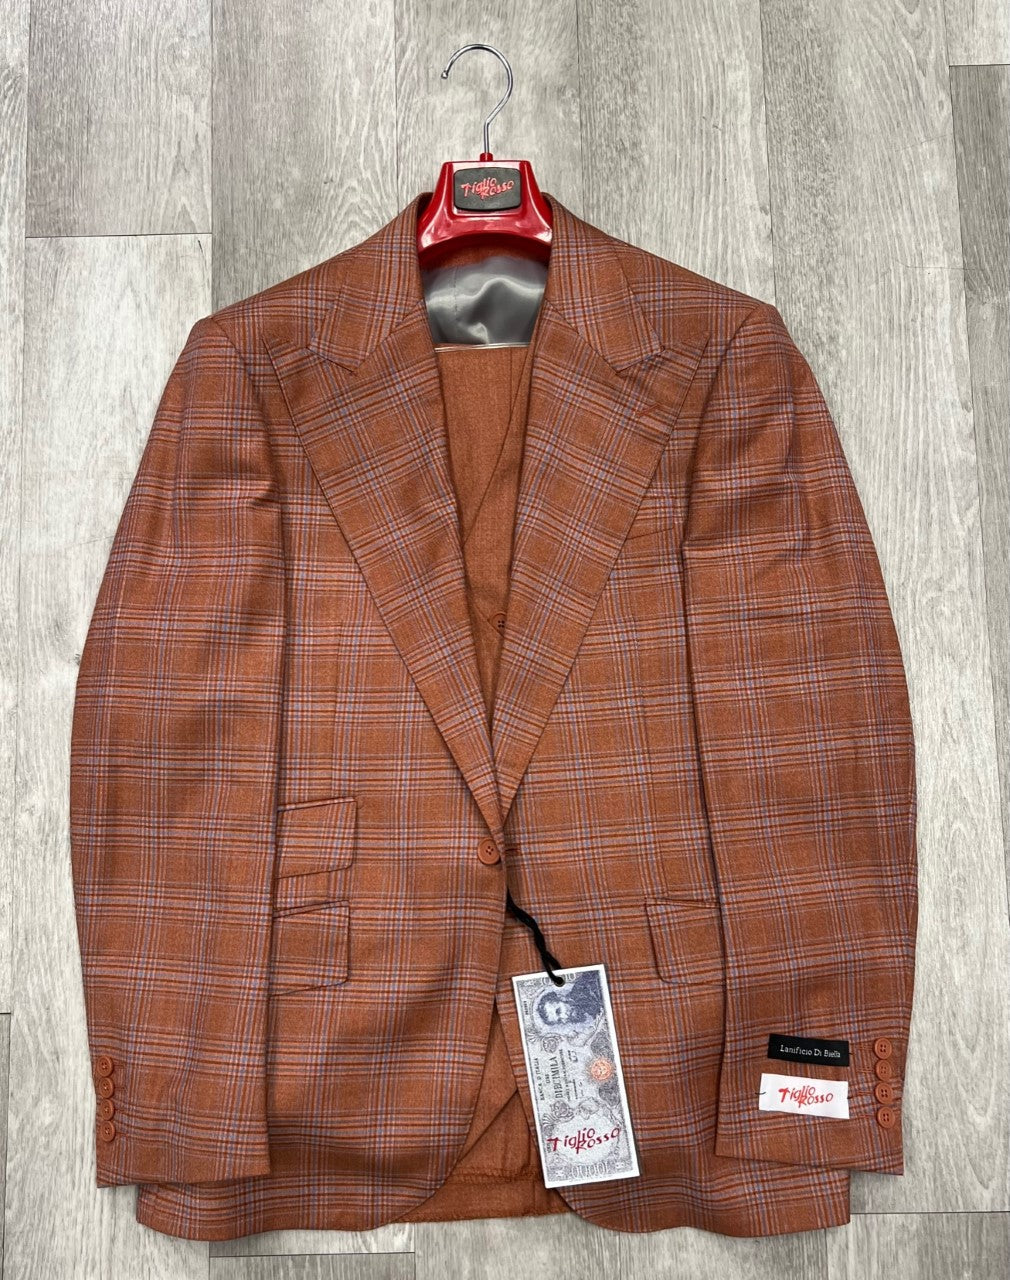 Tiglio Rosso Orvietto Rust/Blue Plaid Wool Suit/Vest TL2611/12 (Single Pleated Regular Fit)